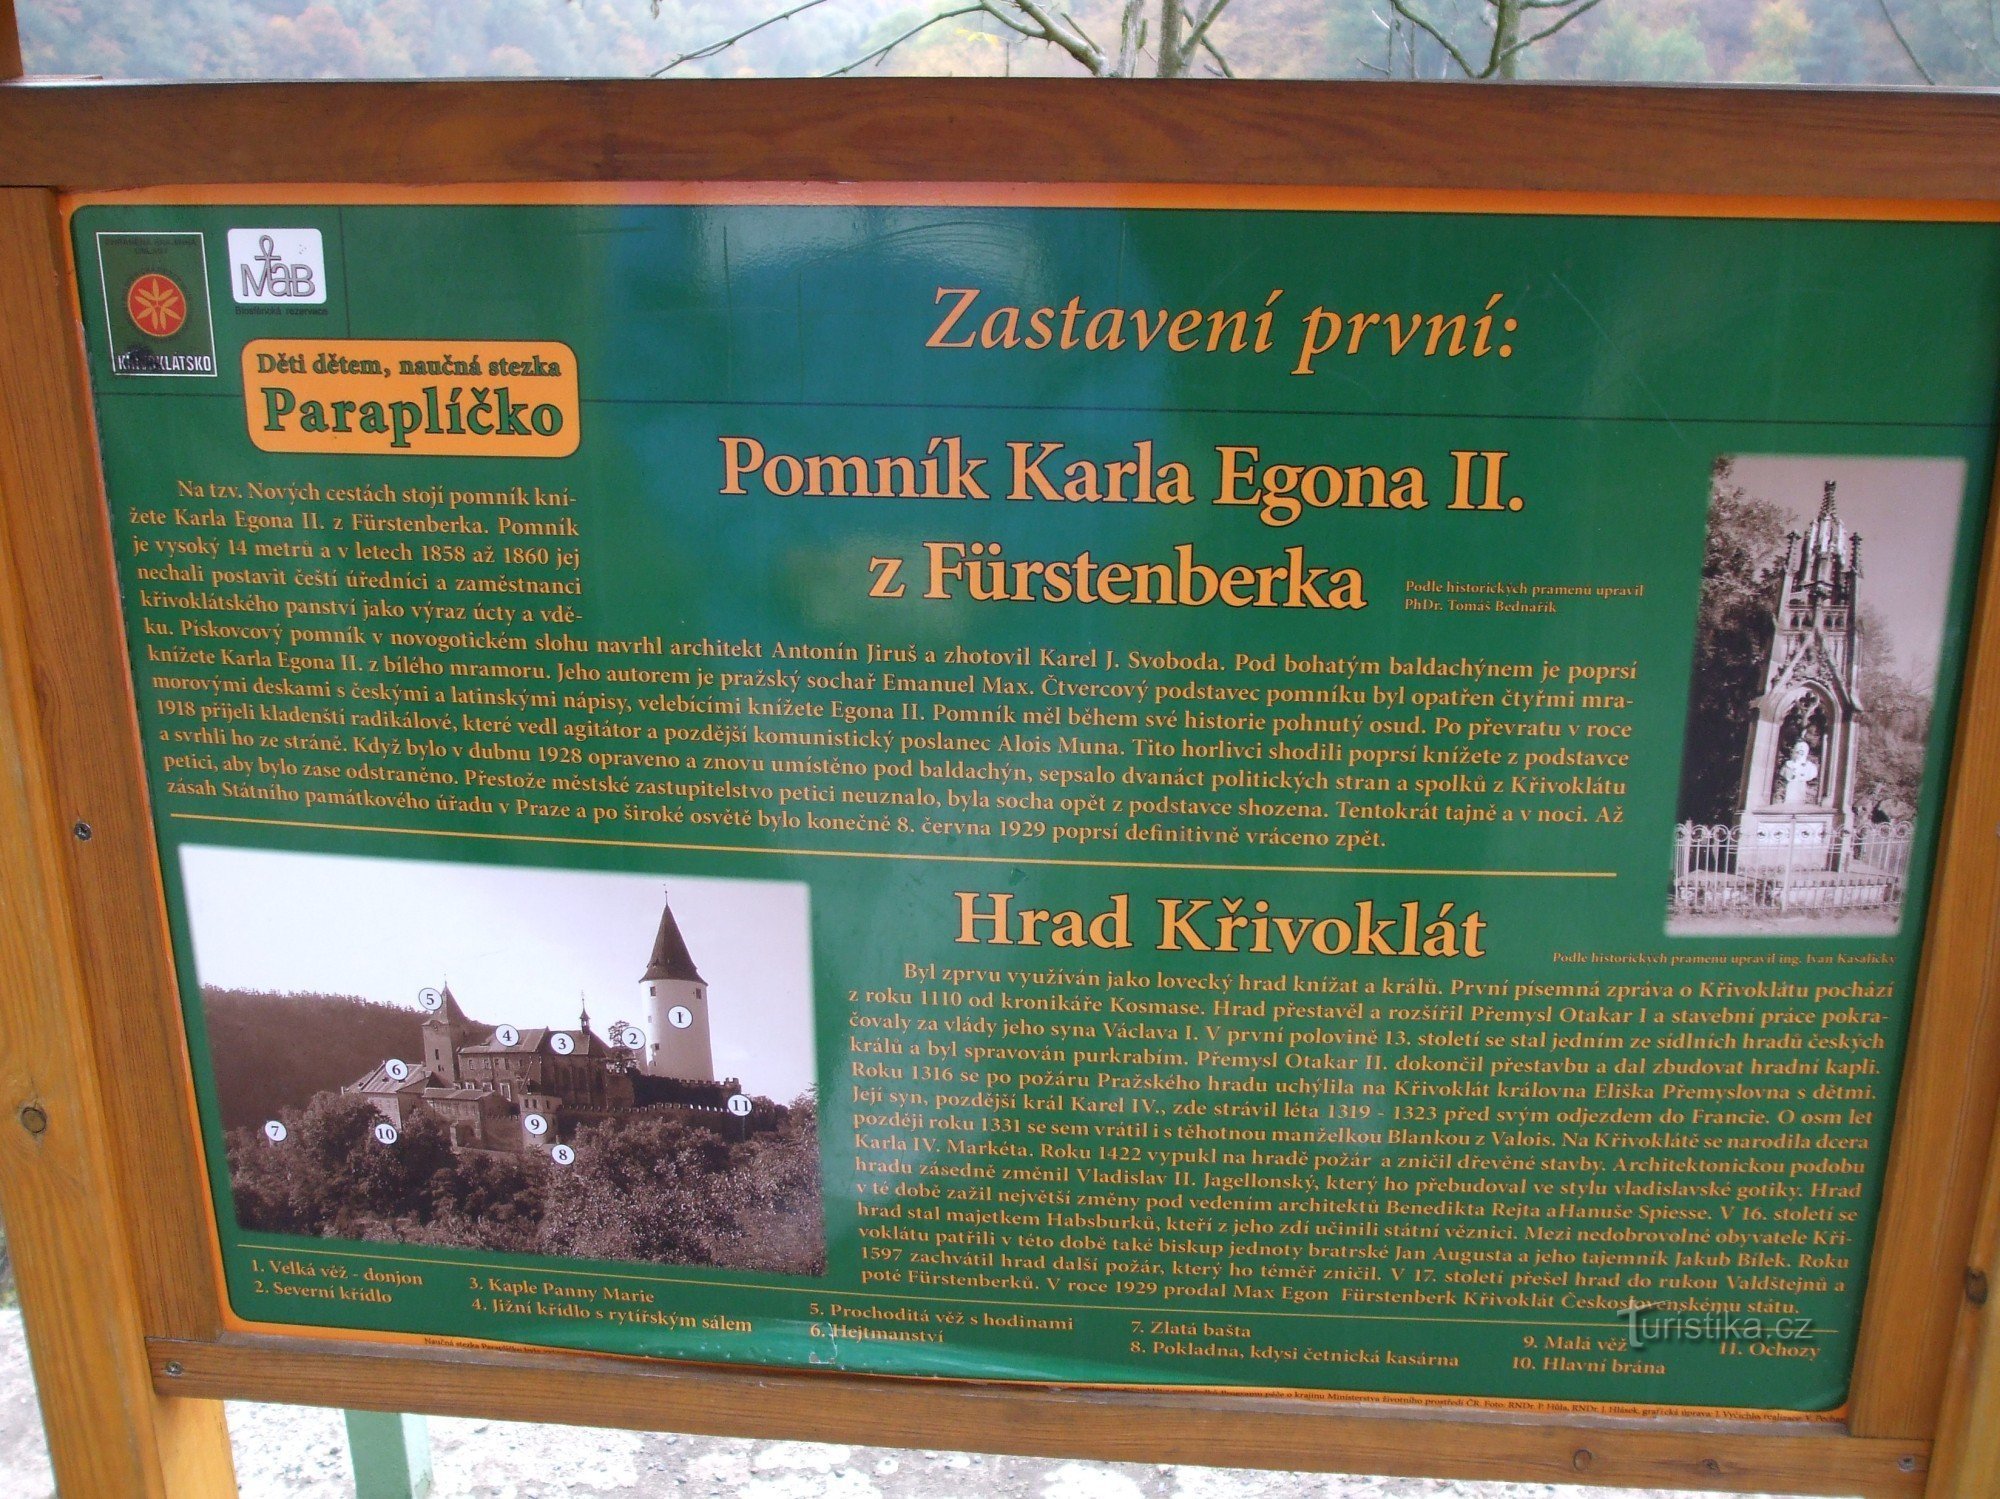 Prinssi Karl Egon II:n muistomerkki. Fürstenbergistä Křivoklátissa.